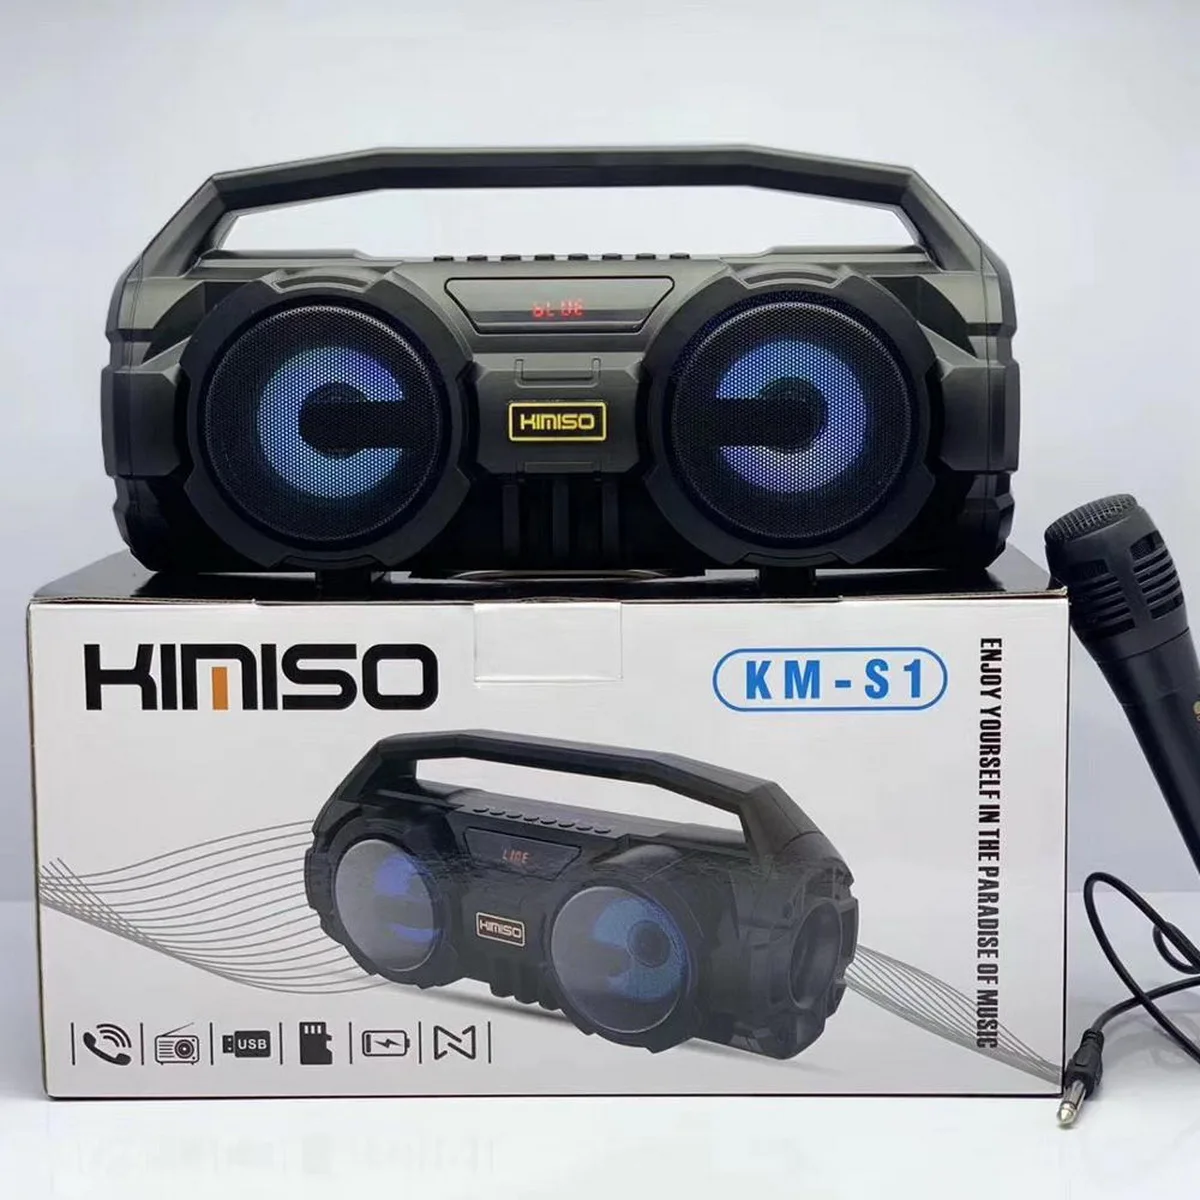 

KMS-S1 kimiso speaker factory direct selling sound system wireless speaker For Home Hotel Car School, Black/gray